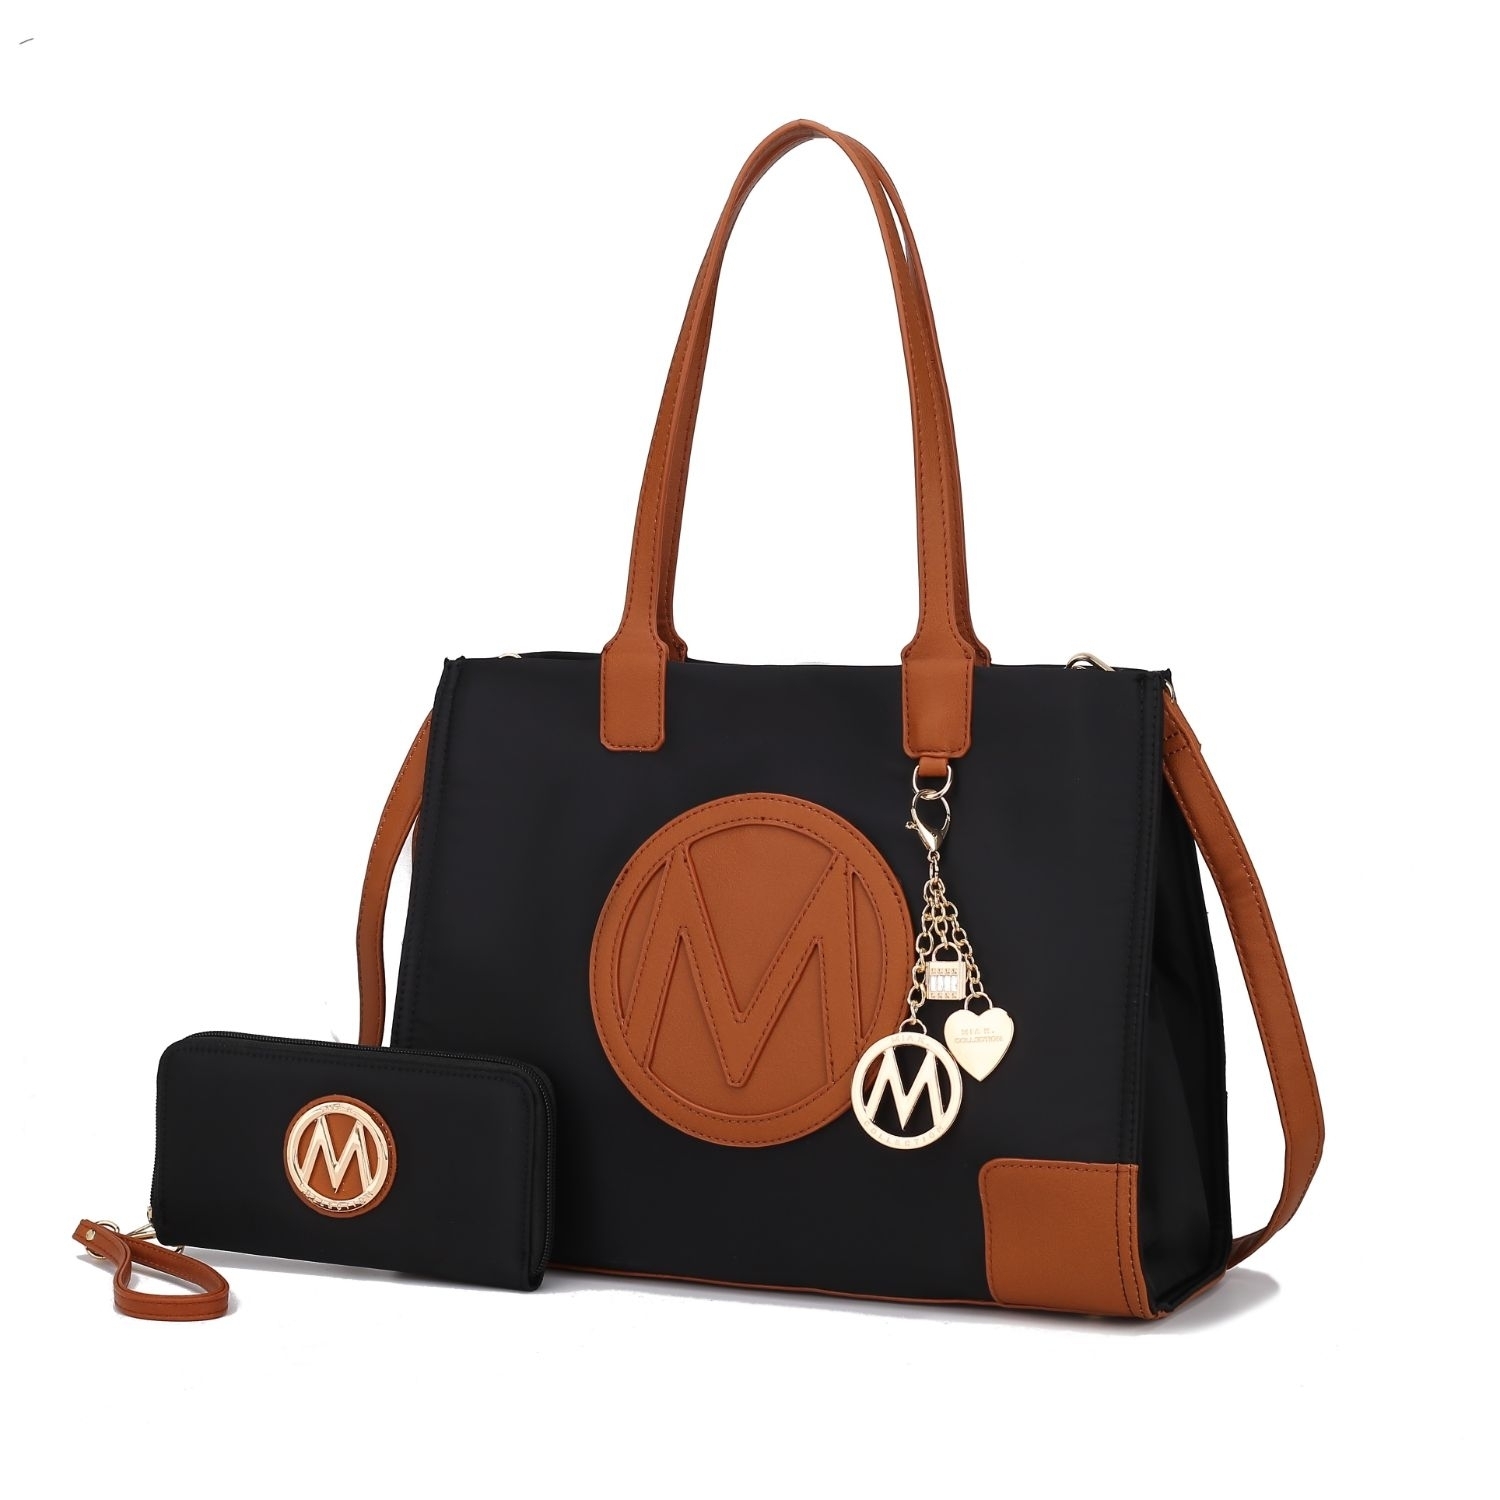 MKF Collection Louise Tote Handbag And Wallet Set By Mia K. - Black Cognac